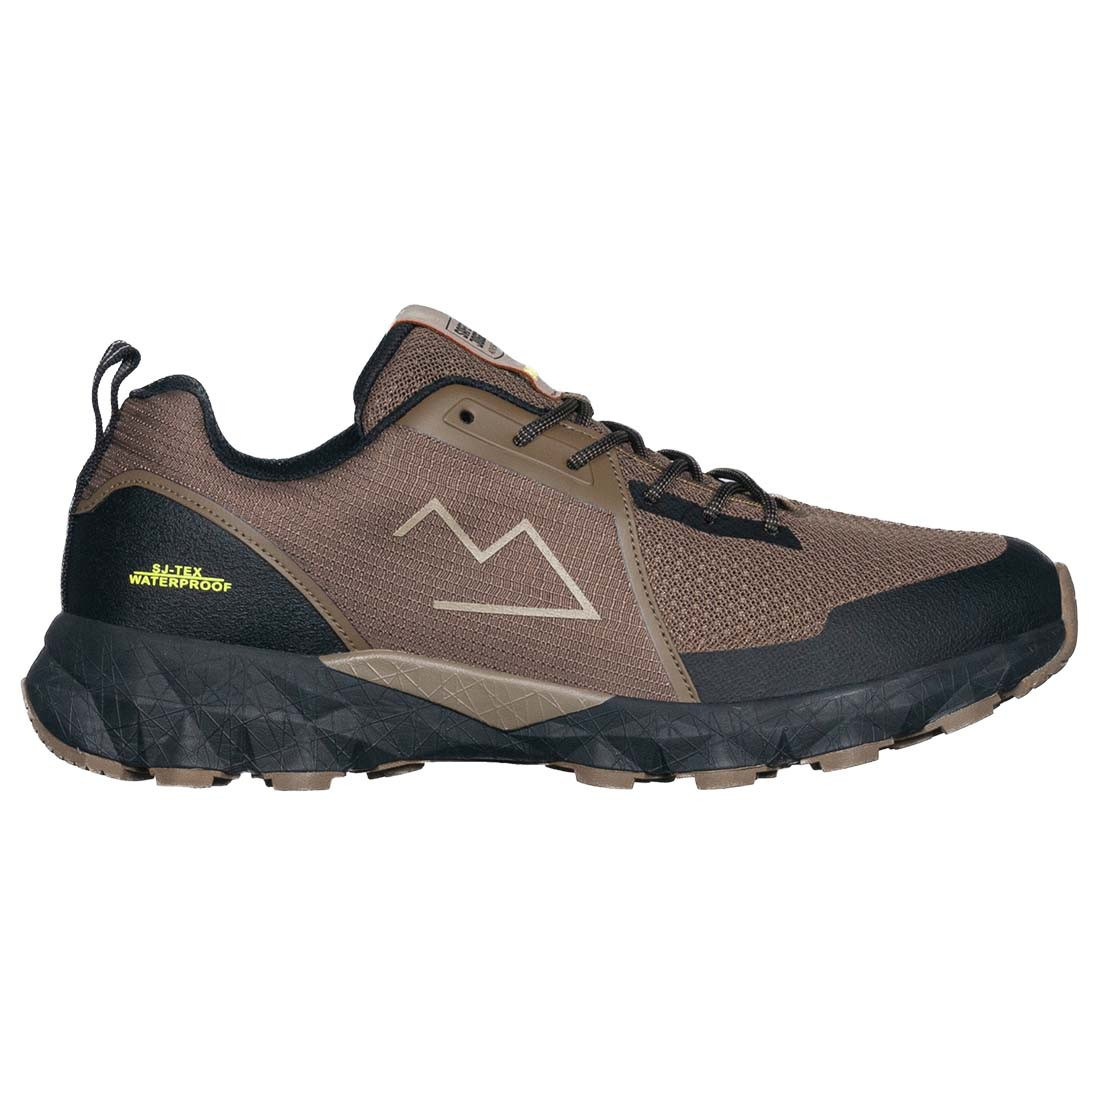 TAMAN sneakers outdoor versatili e impermeabili - Calzature di protezione